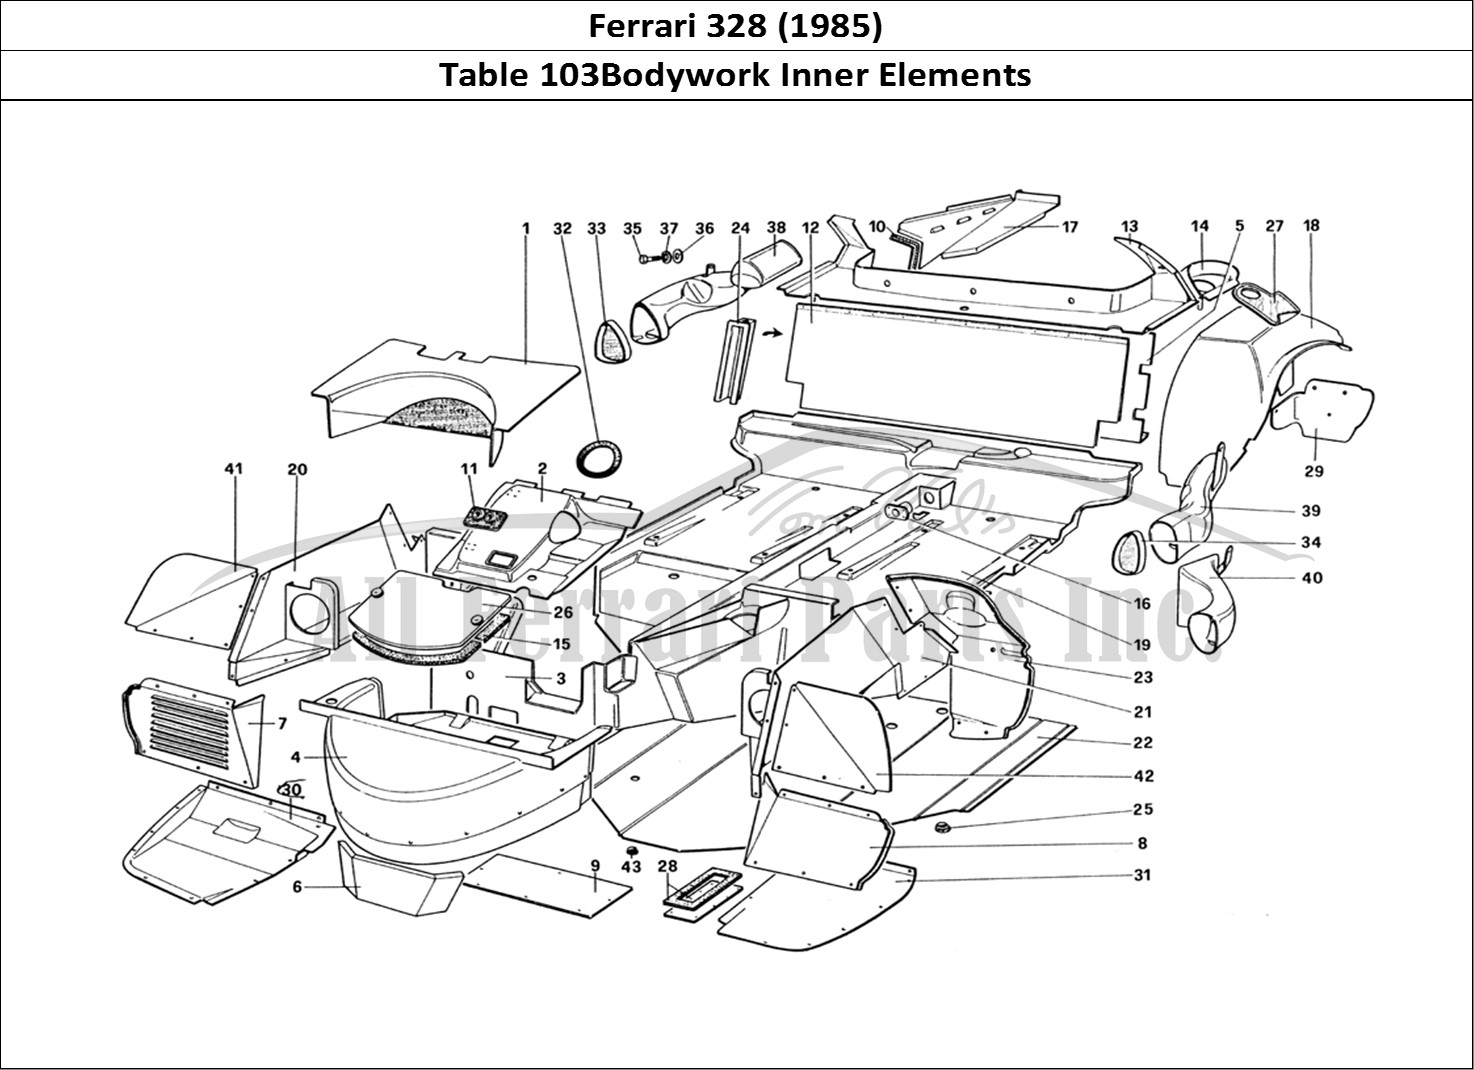 Ferrari Parts Ferrari 328 (1985) Page 103 Body Shell - Inner Elemen